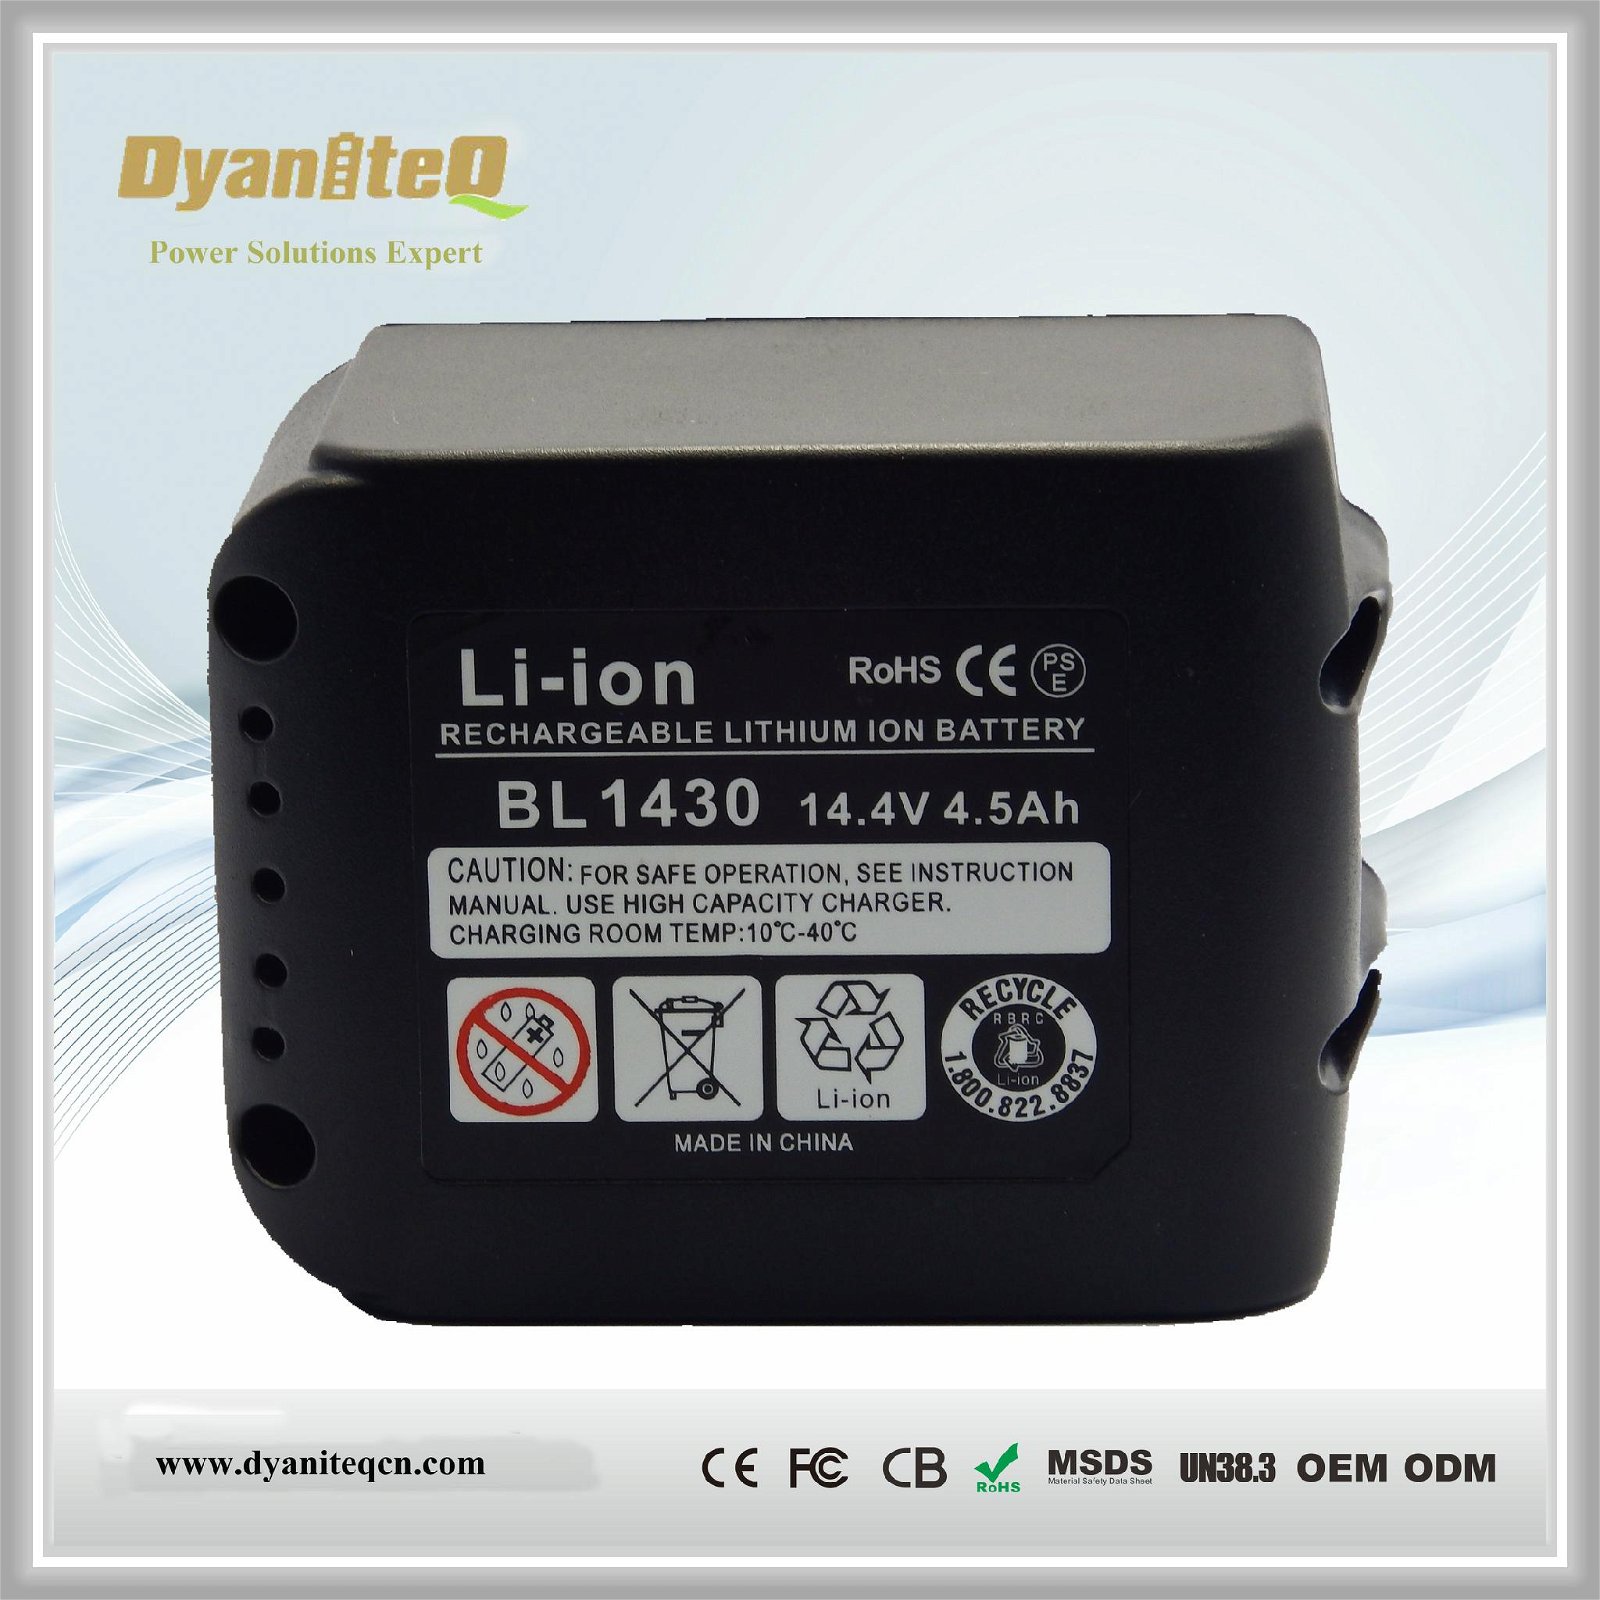 Makita 14.4V Lithium ion Battery 4500mAh for Makita BL1445 BL1430 BL1440  BL1460 - HT005 - DyaniteQ (China Manufacturer) - Battery, Storage